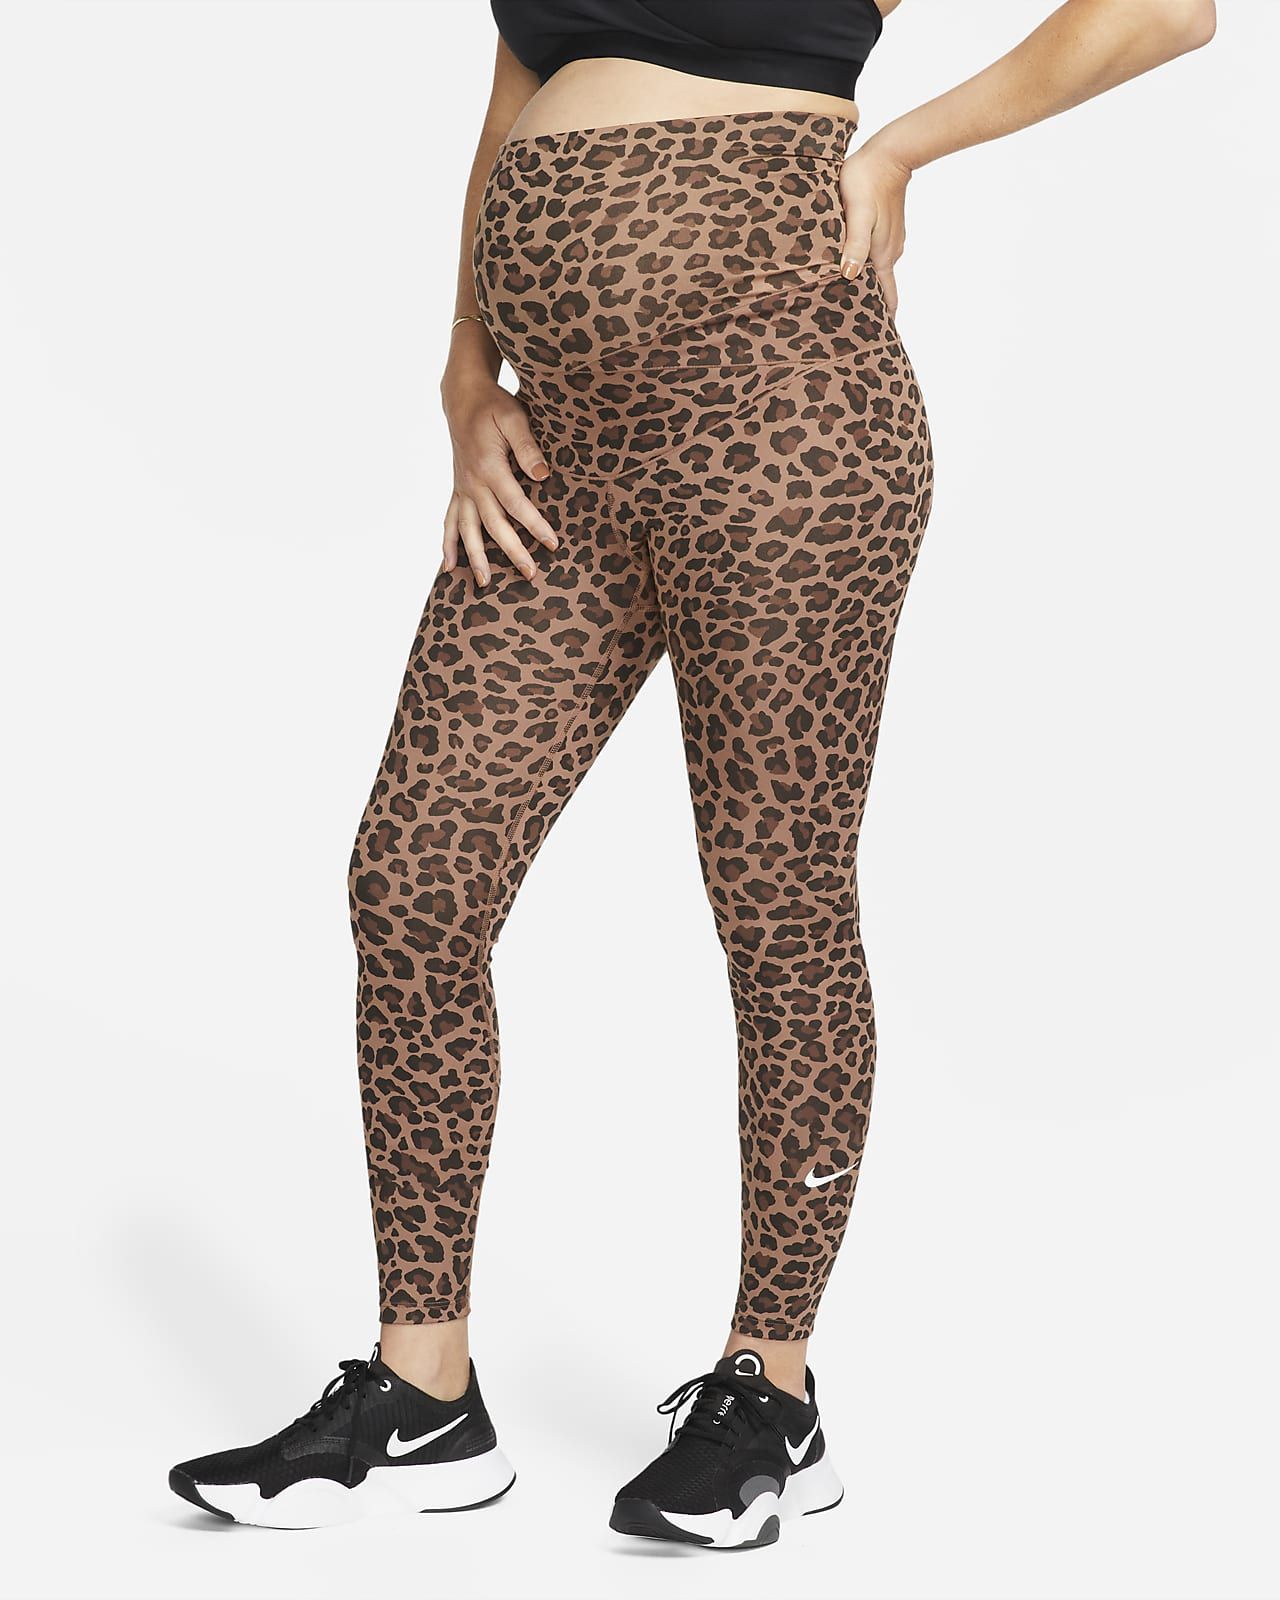 Women's High-Waisted Leopard Print Leggings (Maternity) | Nike (US)